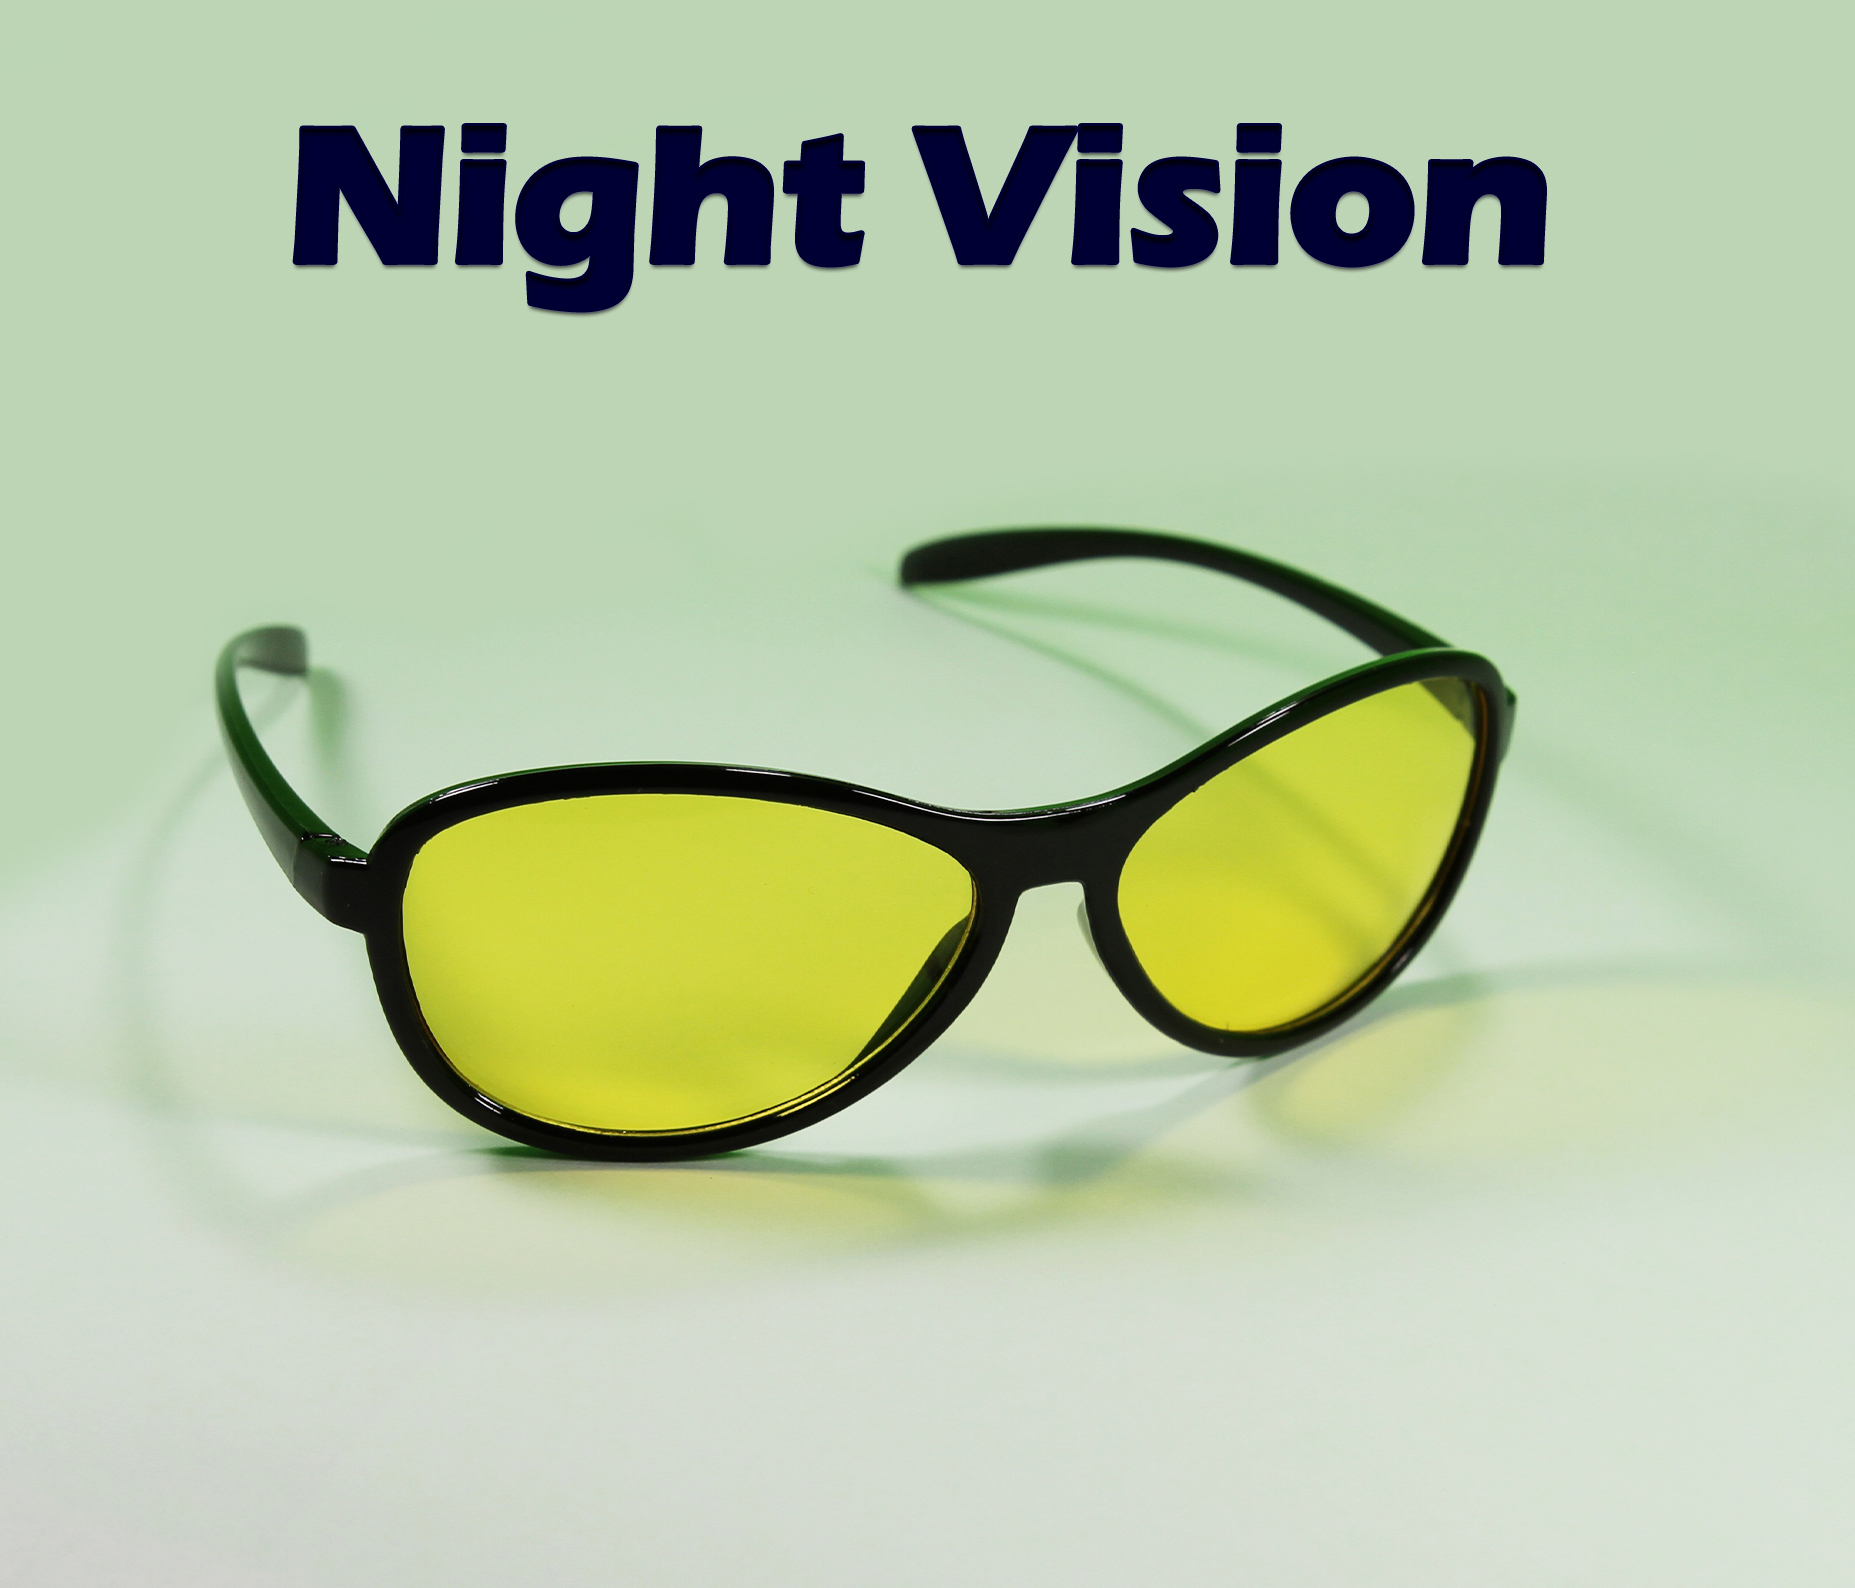 Hd Vision Smart View Elite Anti Glare Driving Lens Sunglasses Pack Of 2 Ebay